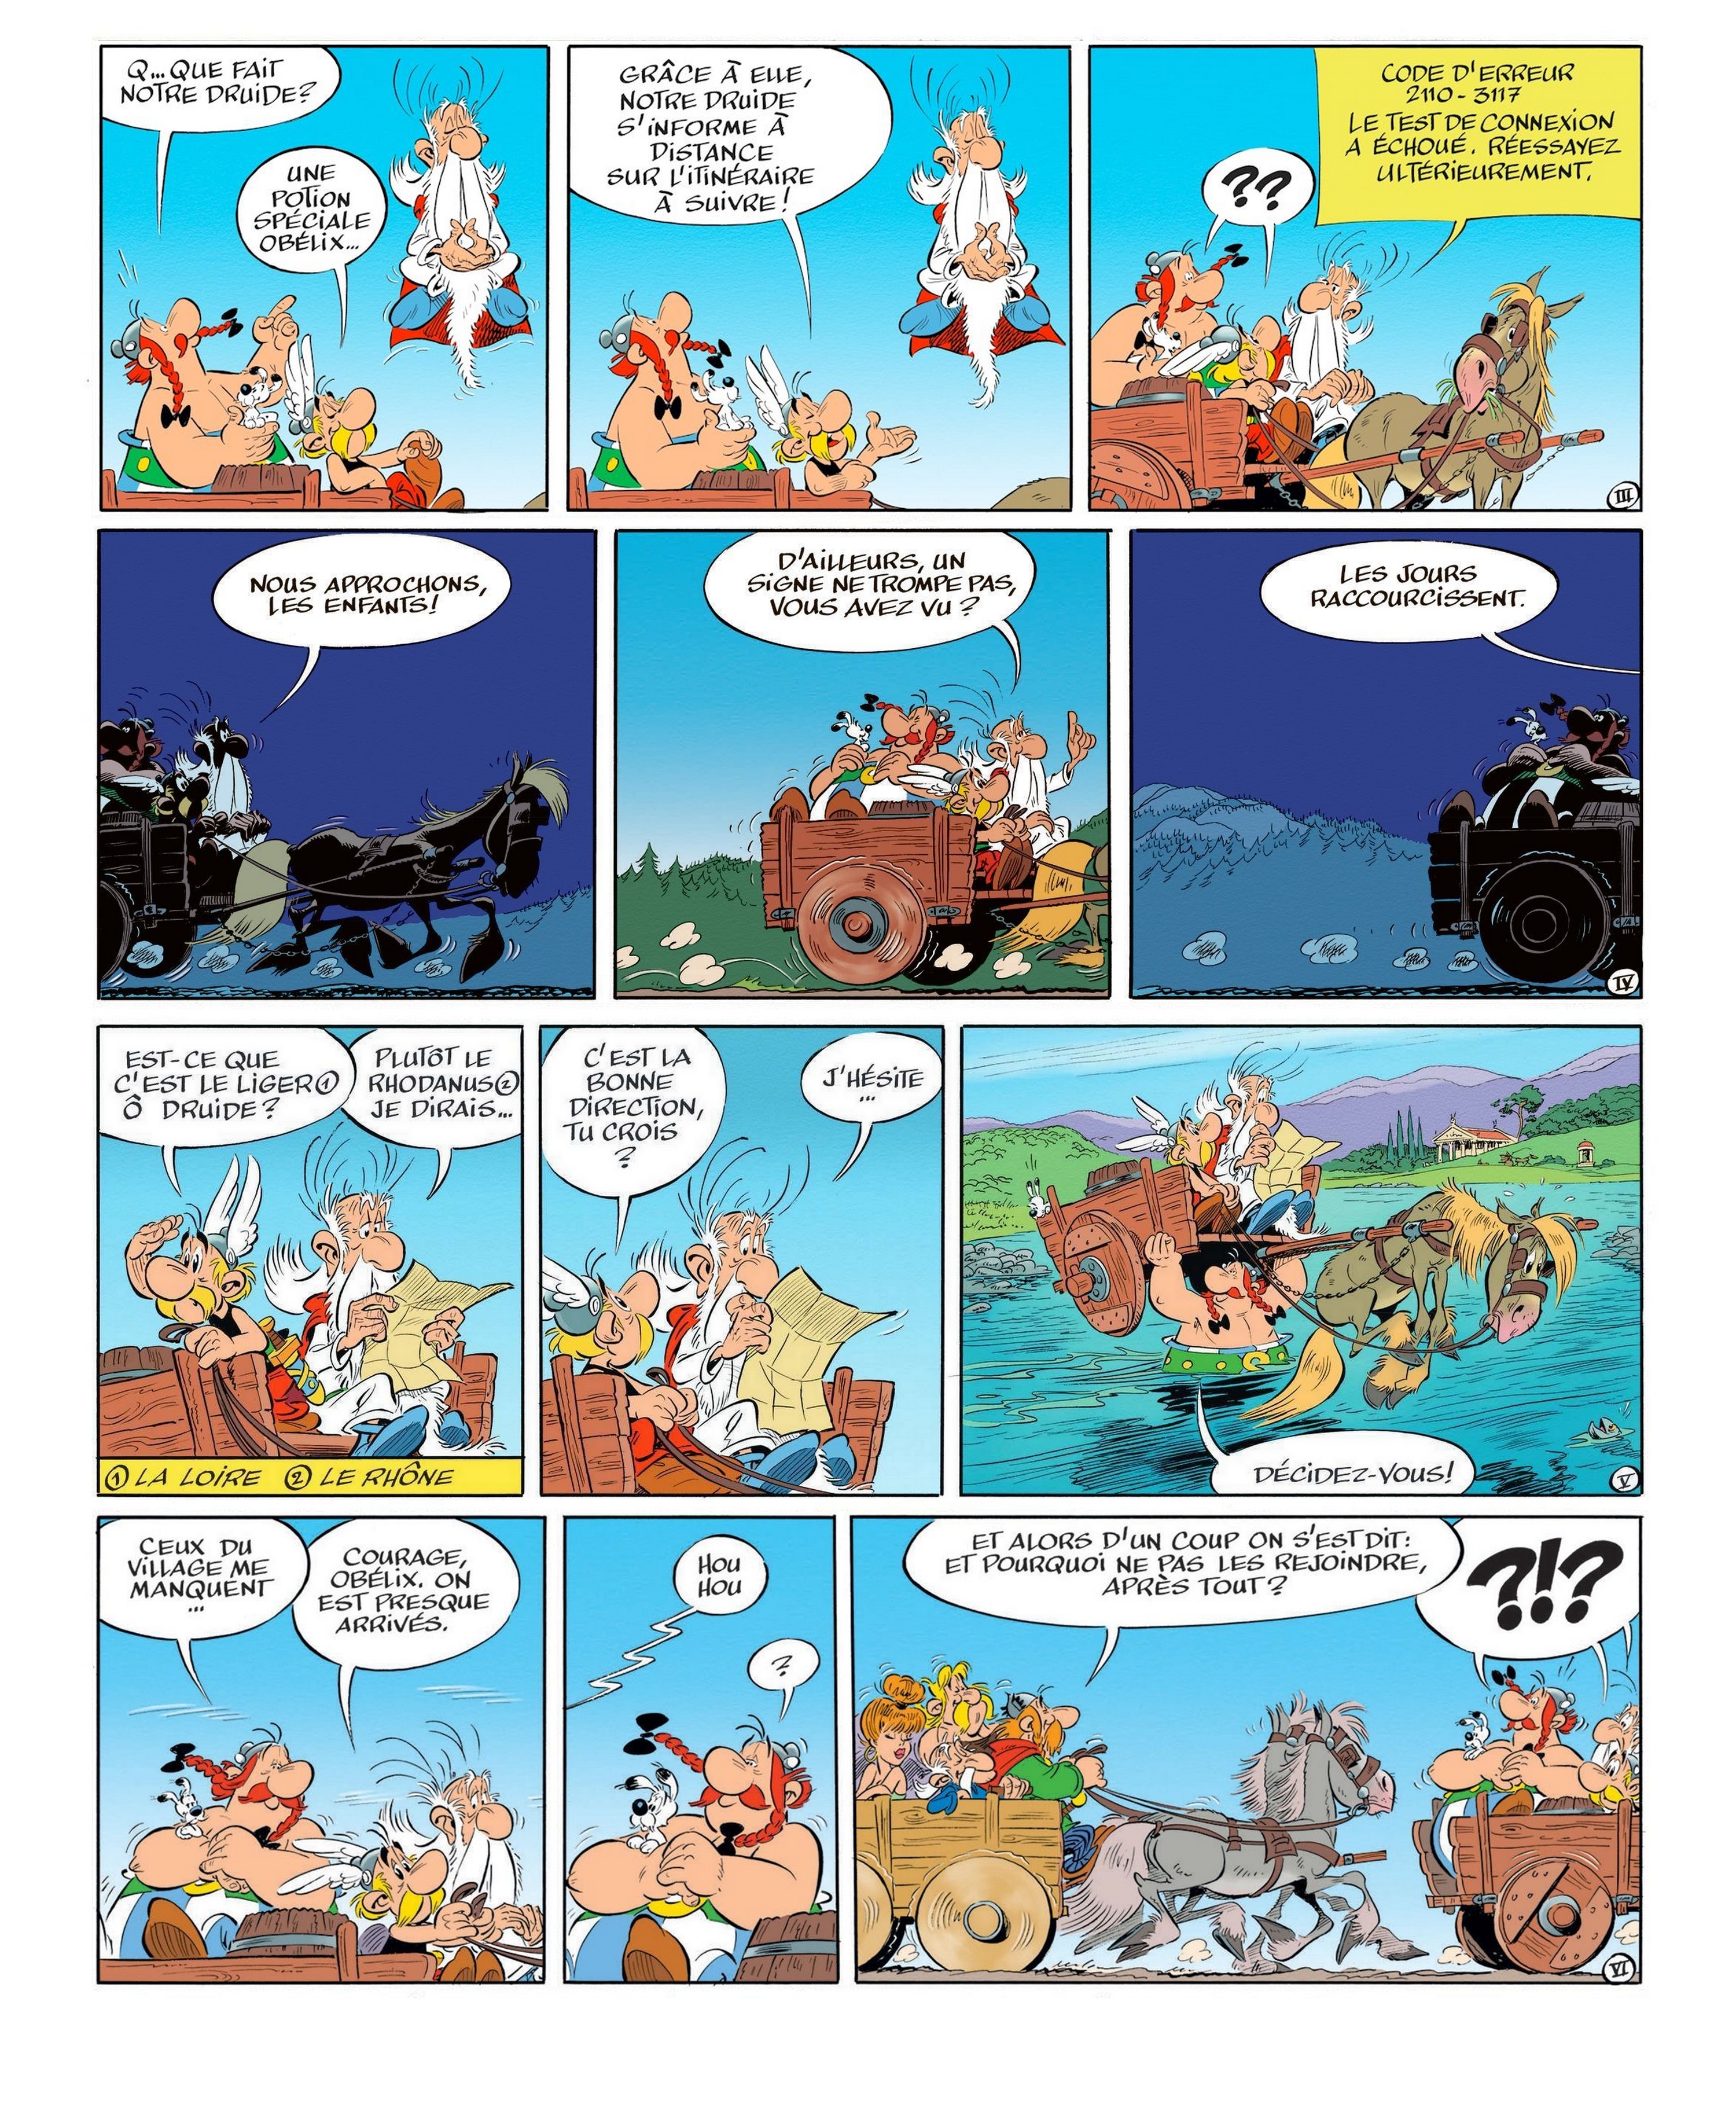 Astérix le Gaulois [BD - Goscinny & Uderzo - depuis 1959] - Page 4 Vexf